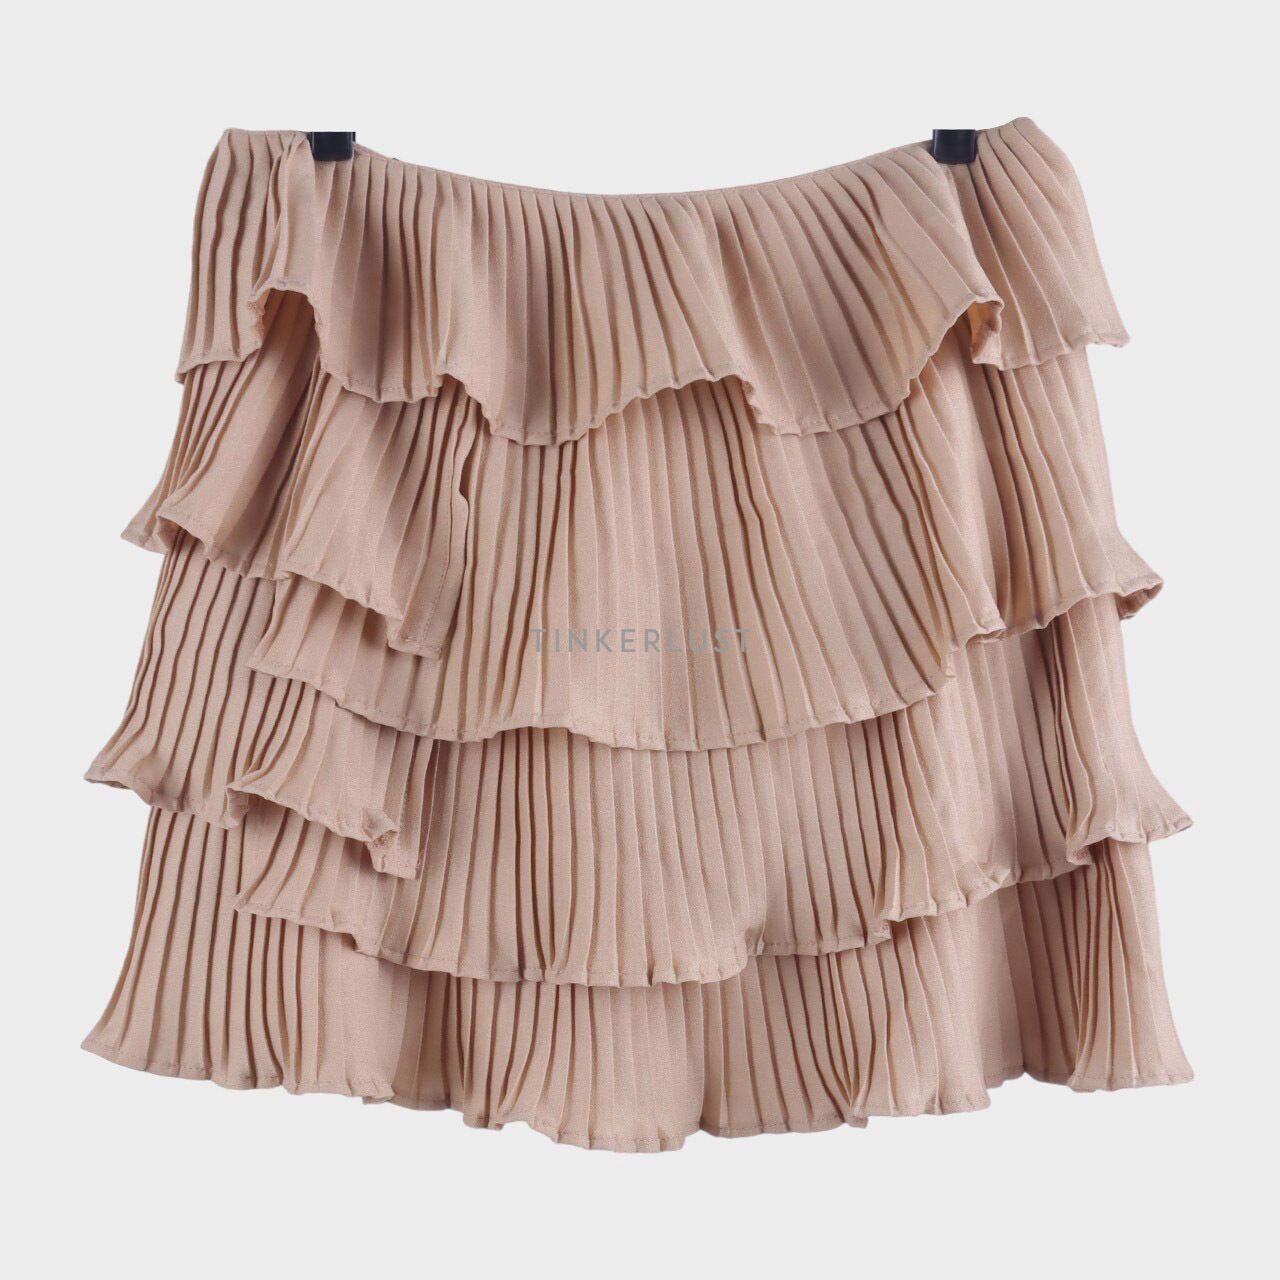 Cara Woman Light Brown Ruffle Mini Skirt